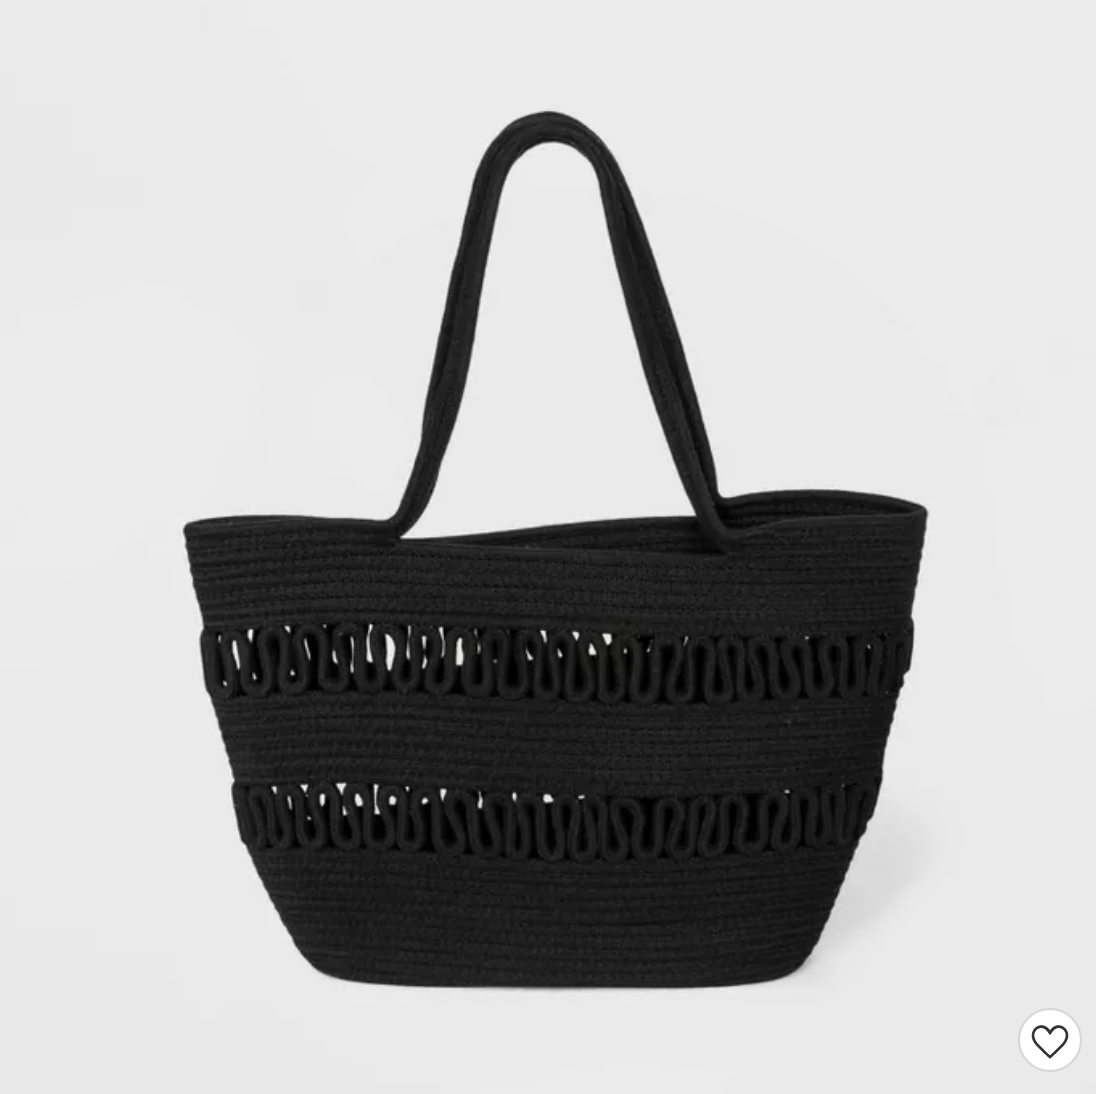 Rope Tote Handbag - $39.99 from Target